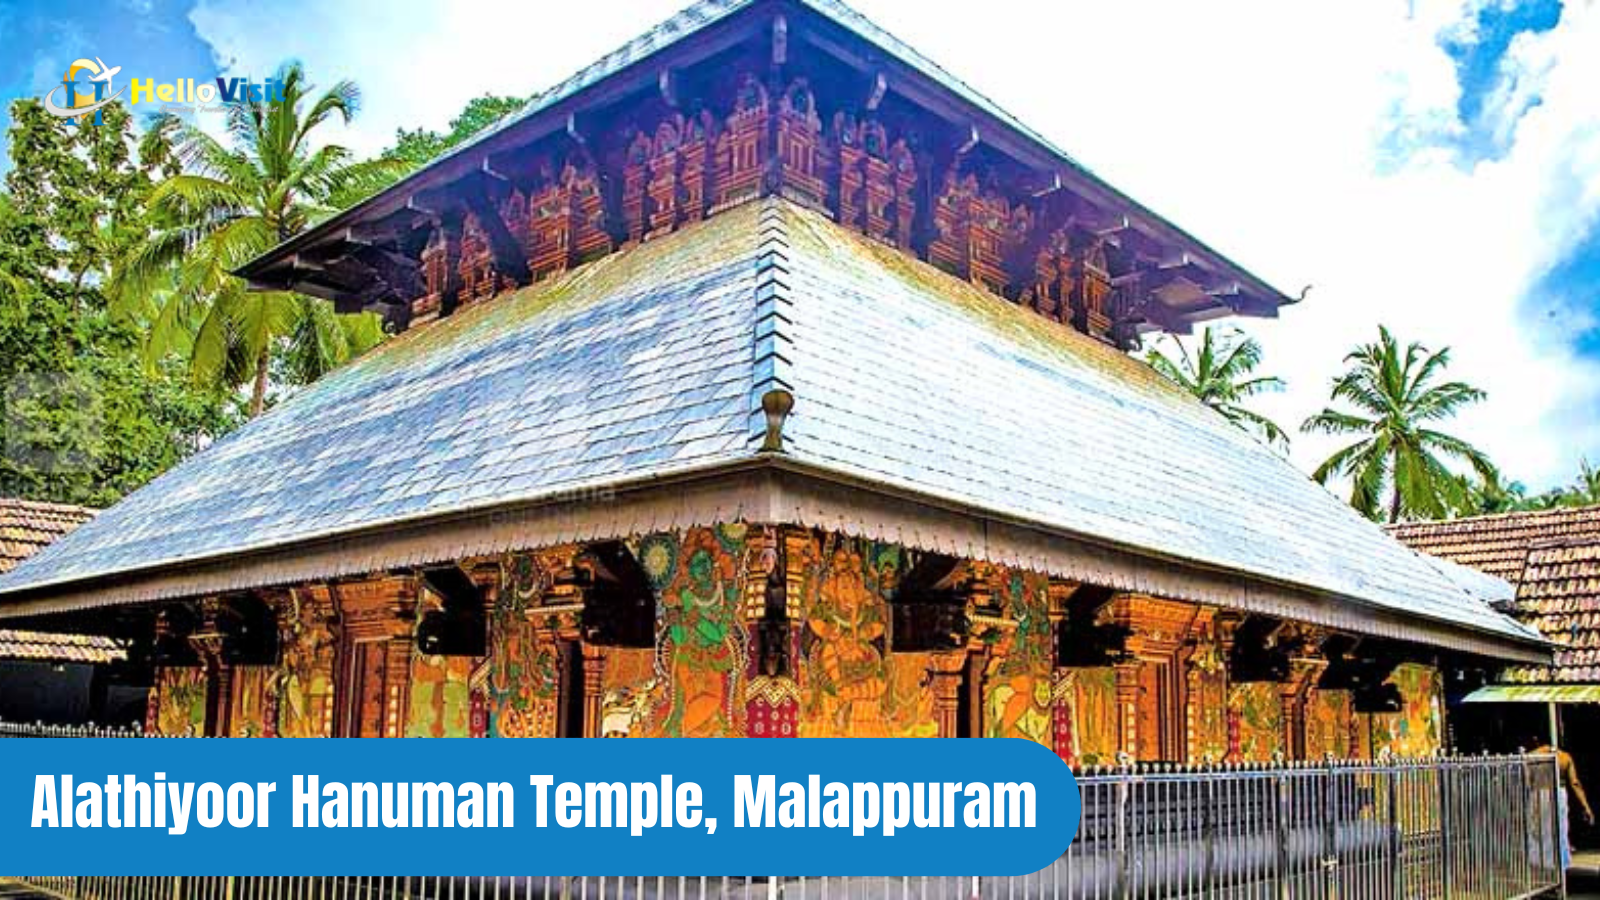 Alathiyoor Hanuman Temple, Malappuram